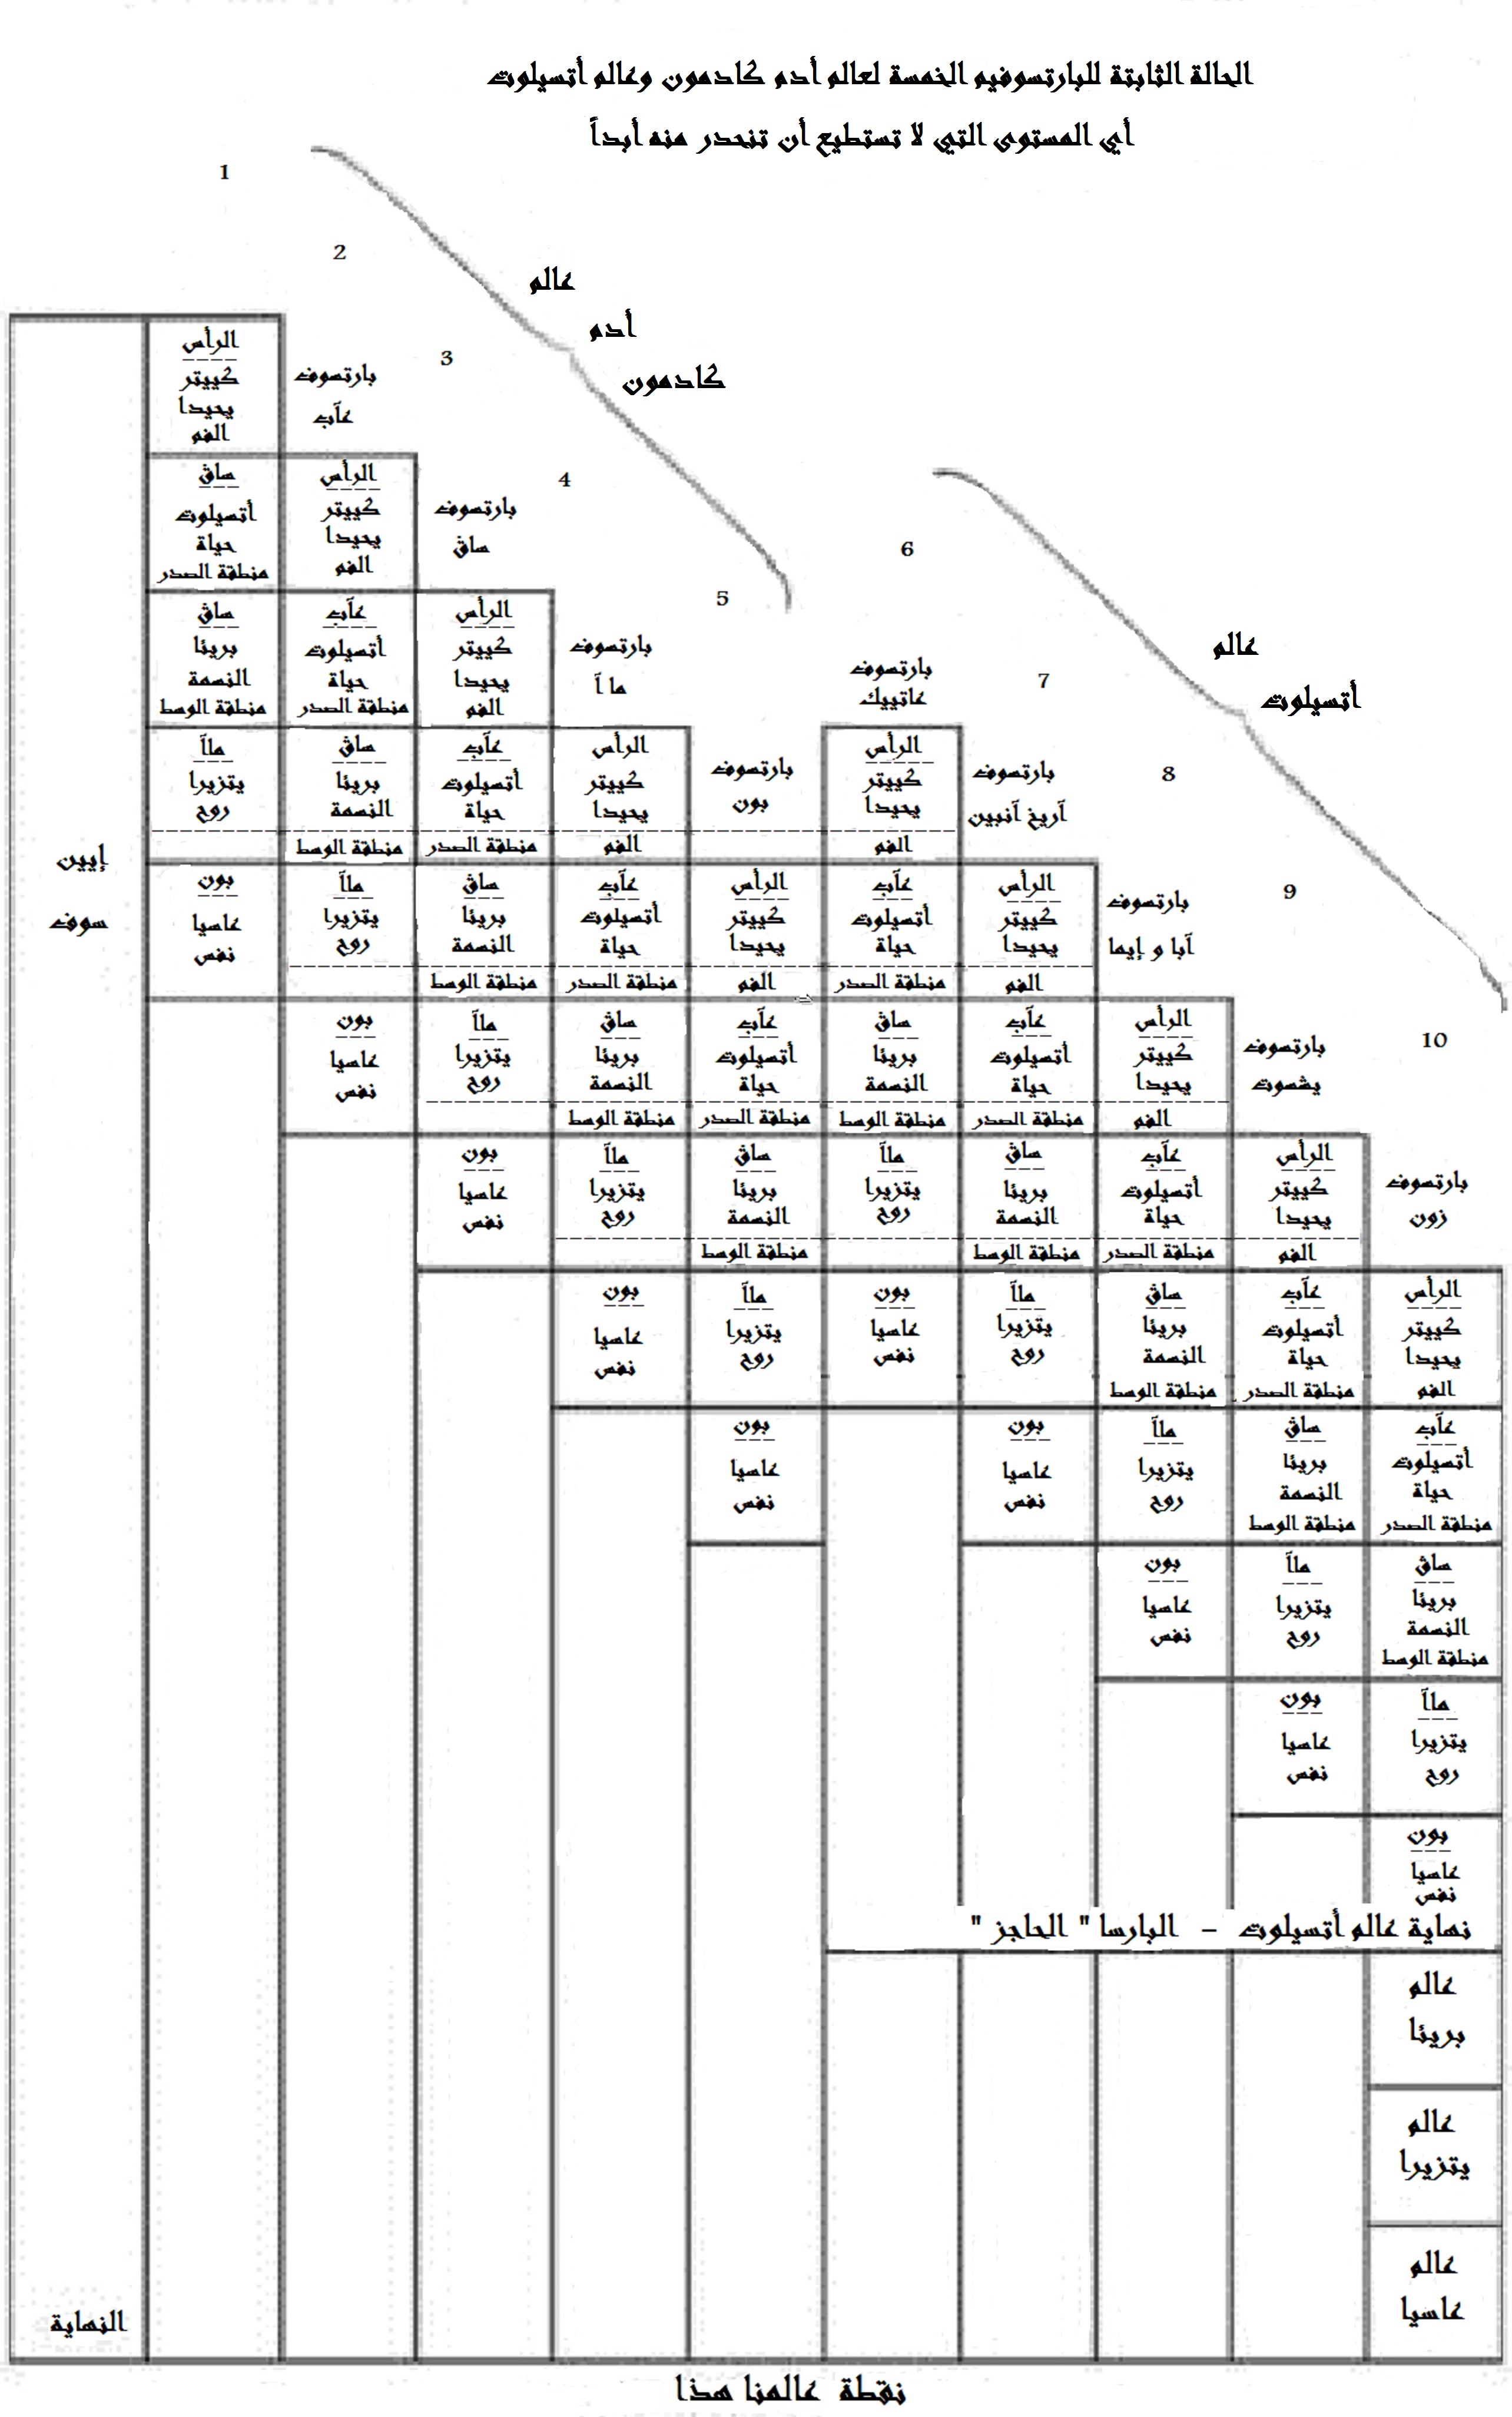 ha_ilan_the_tree_diagram_no_3_reference